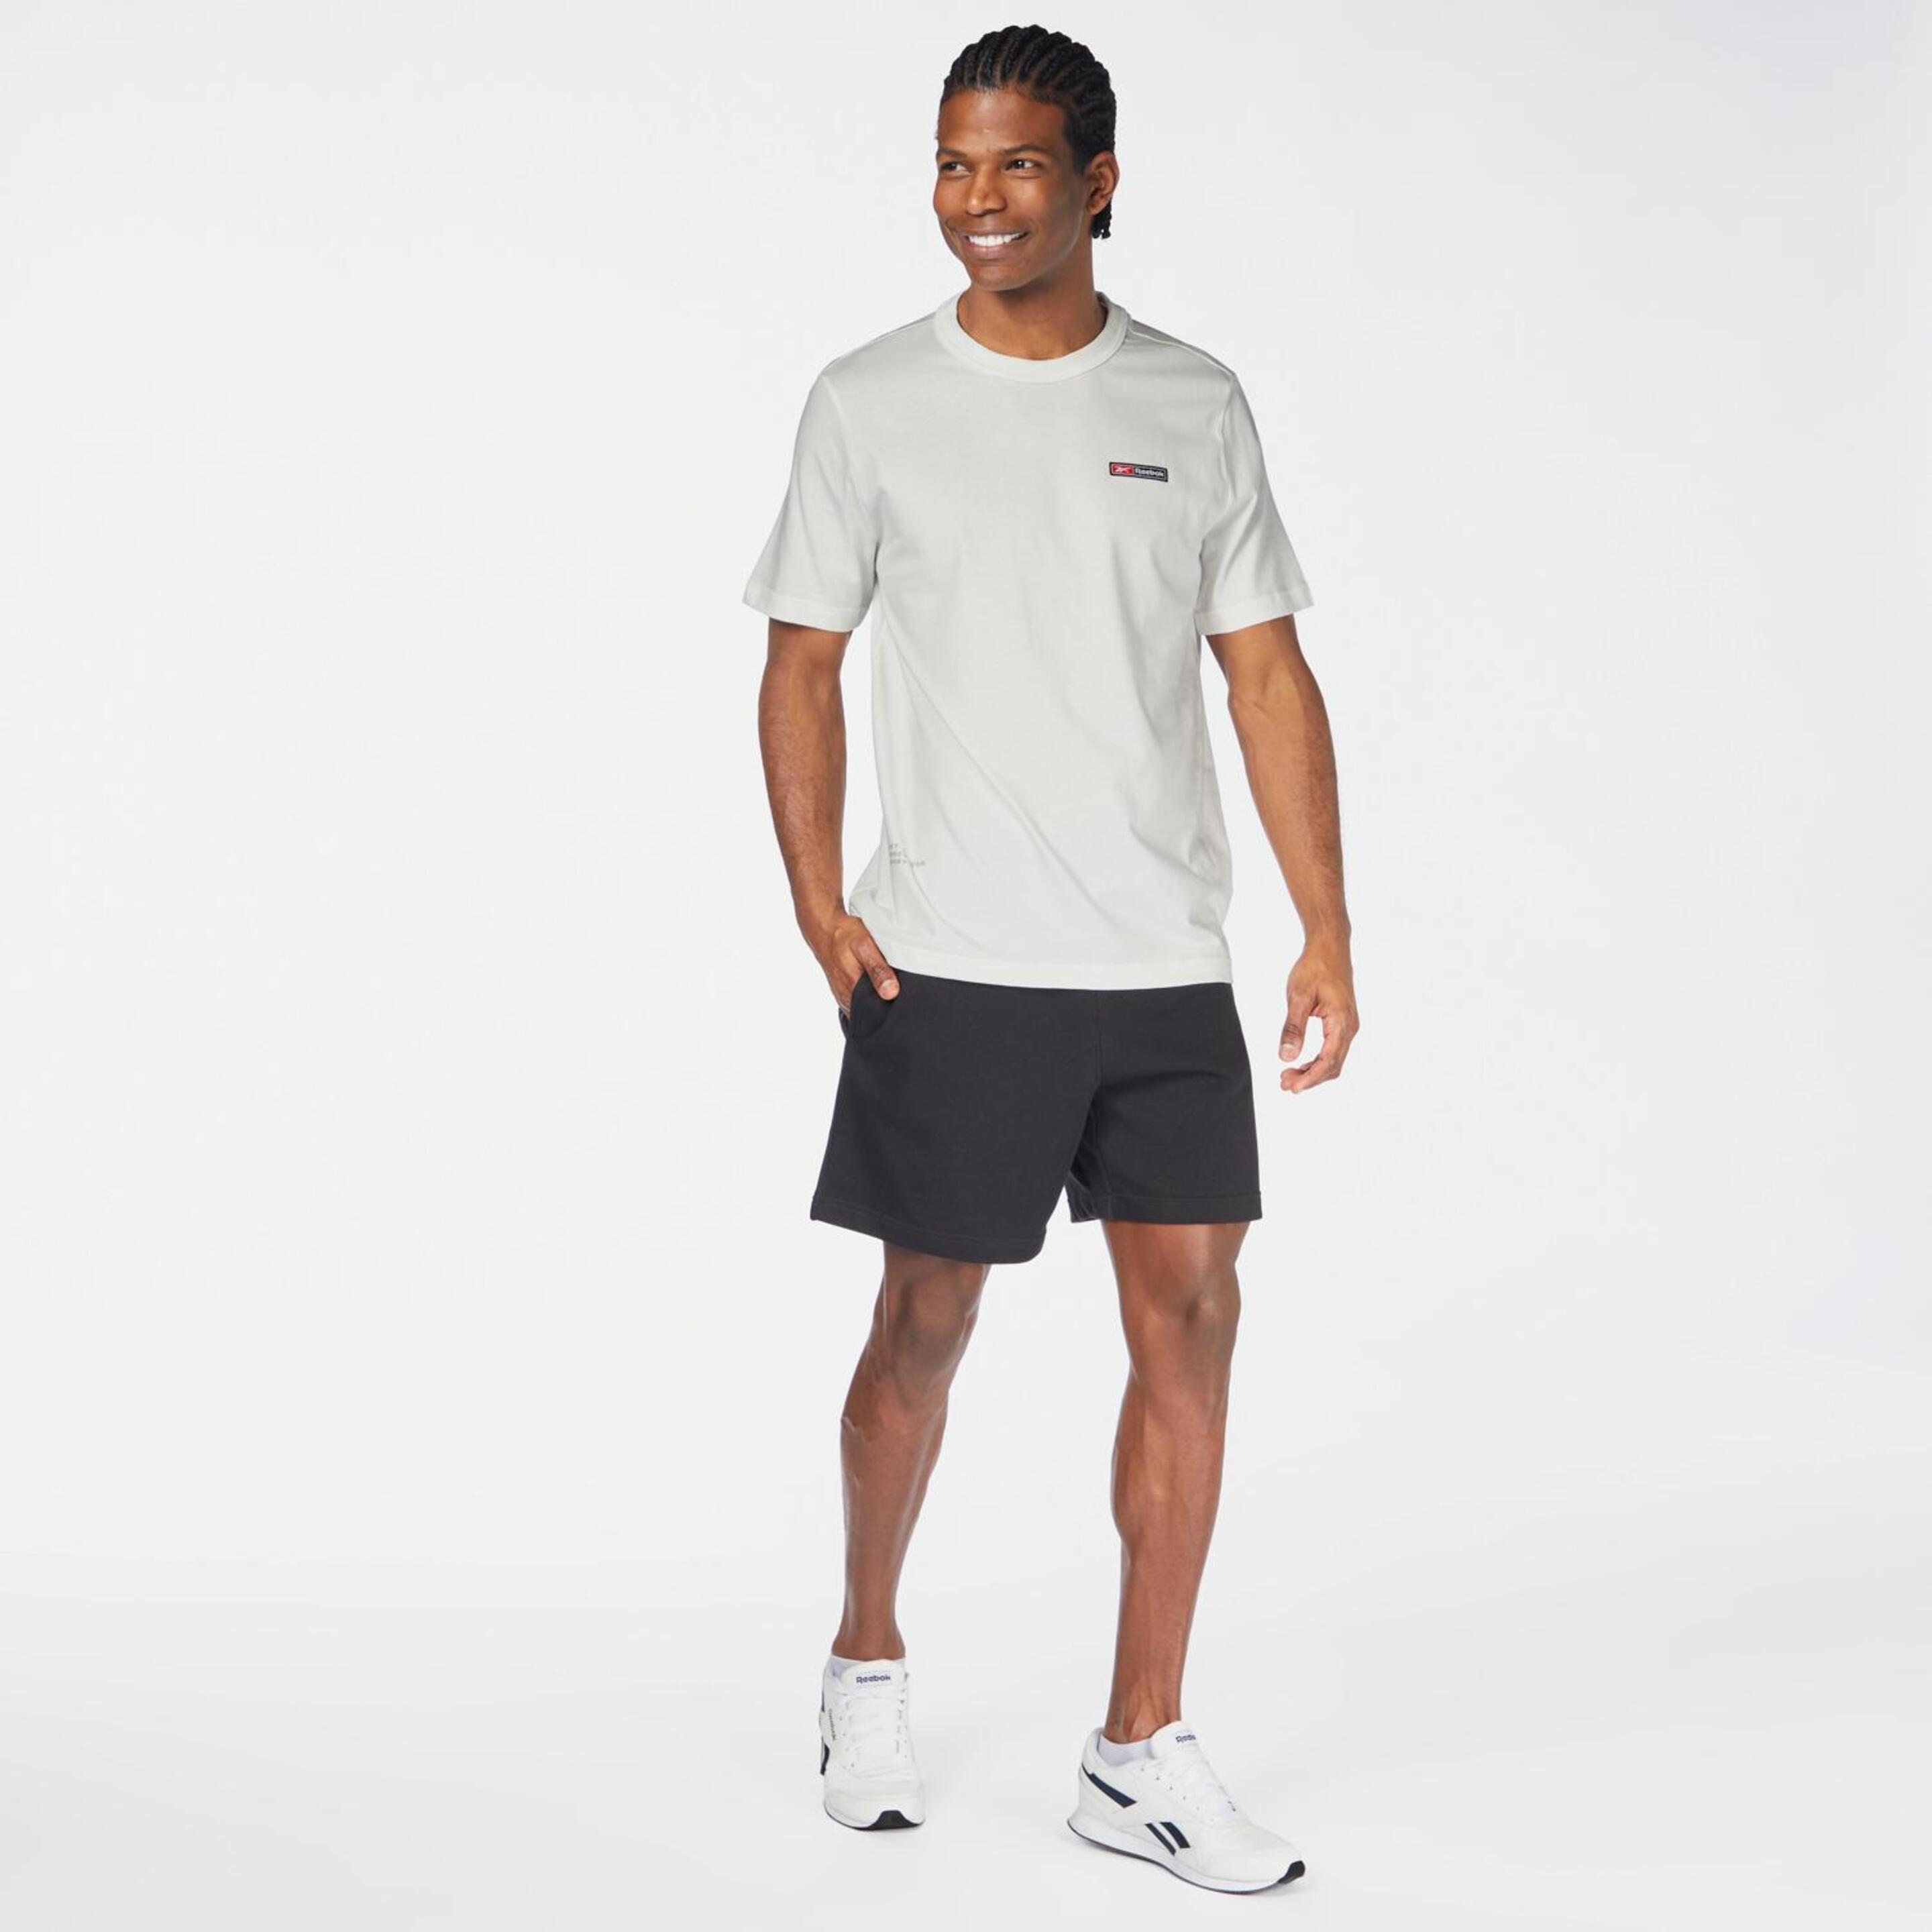 Reebok Vector - Blanco - Camiseta Hombre  | Sprinter